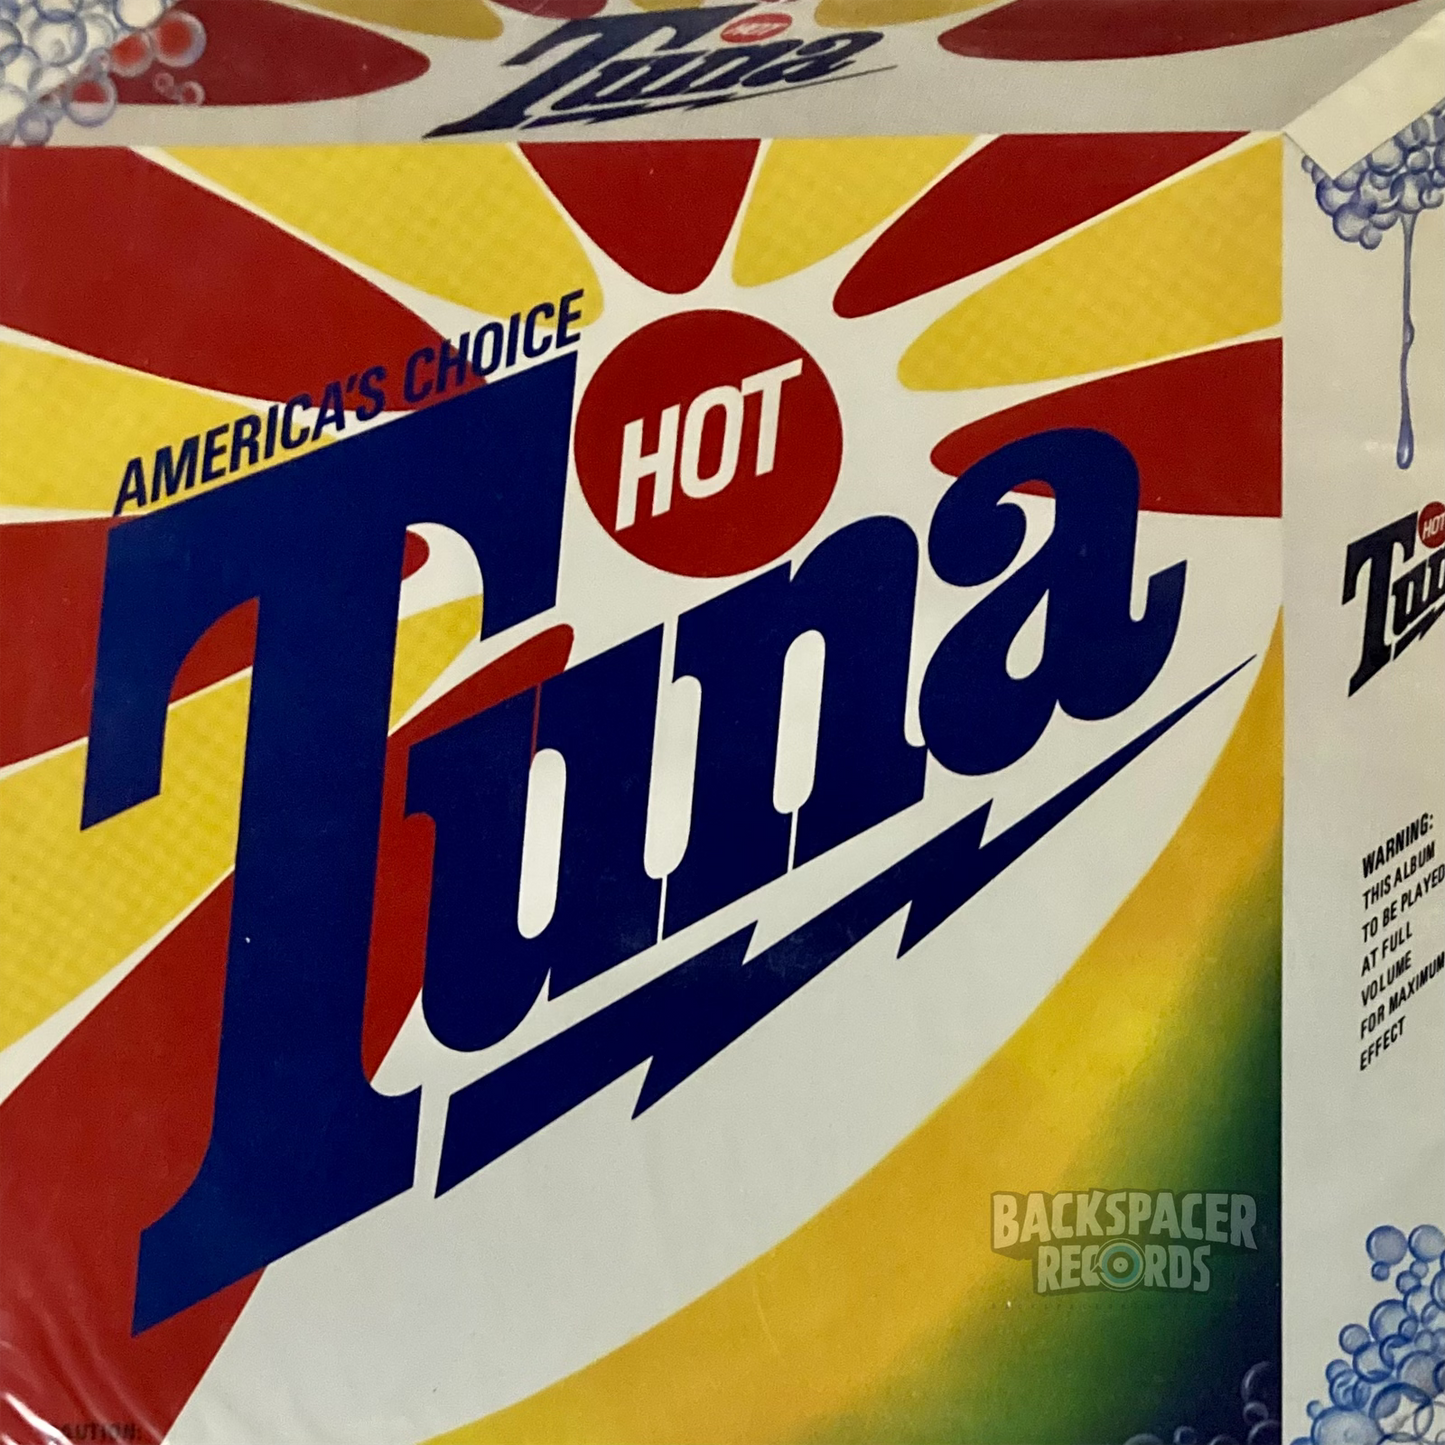 Hot Tuna – America's Choice (Limited Edition) LP (Sealed)